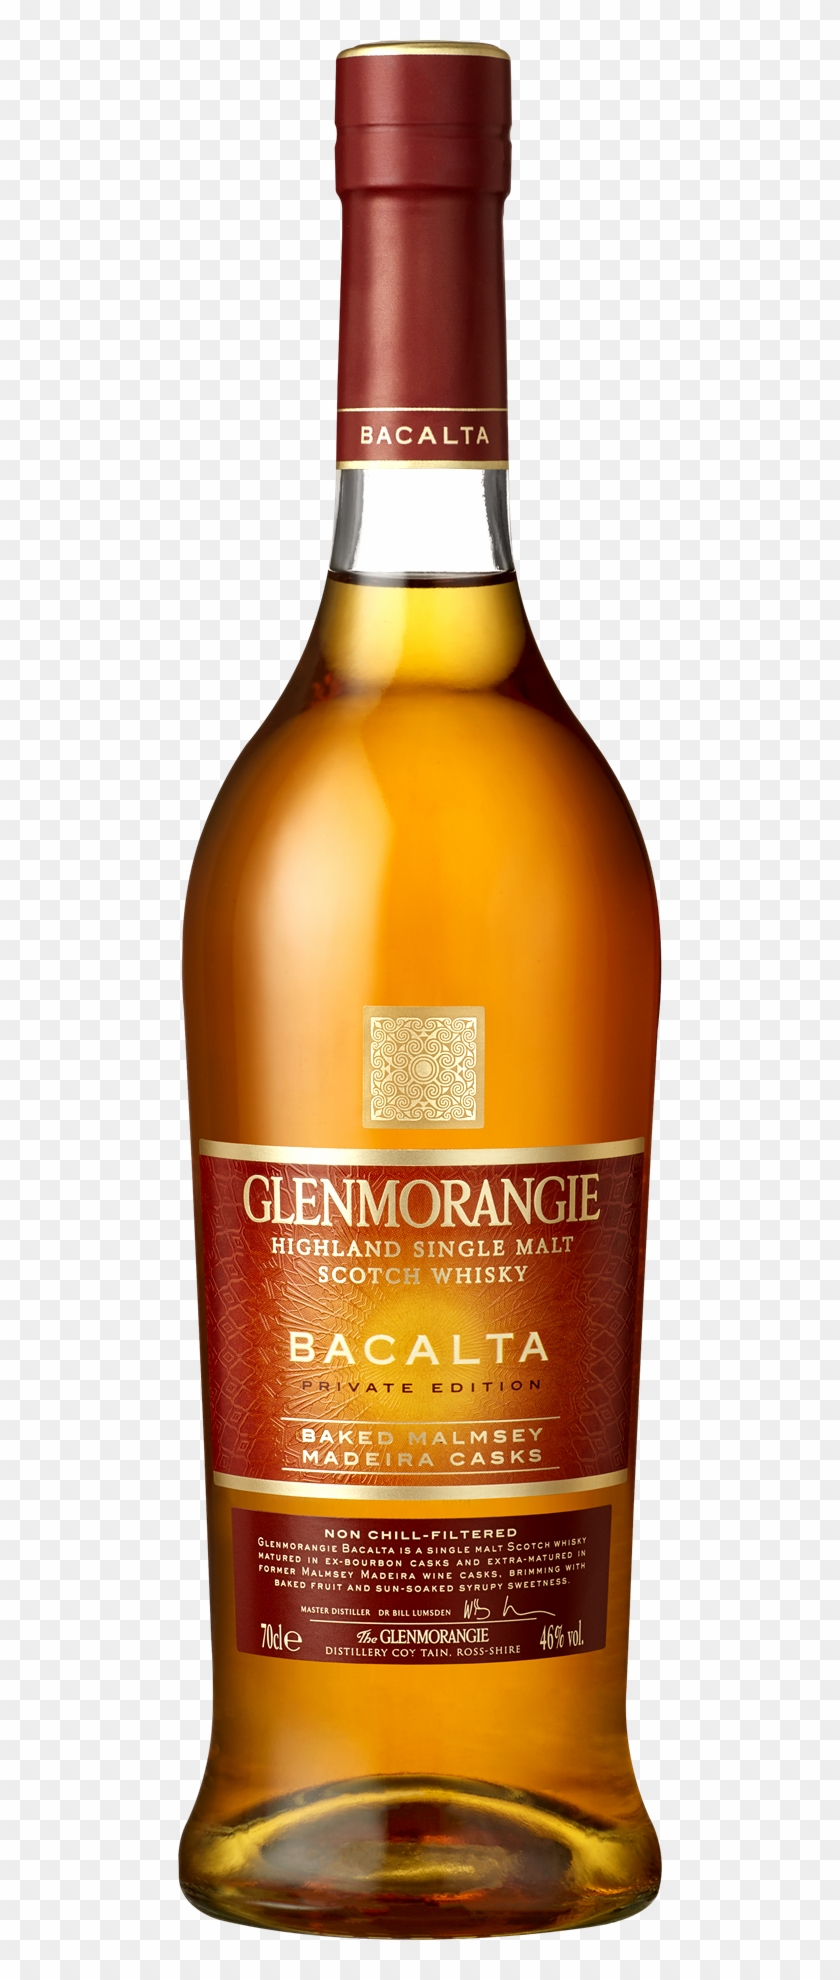 Glenmorangie Bacalta Bottle Shot Transparent Background - Glenmorangie Bottle Transparent Background Clipart #2857284